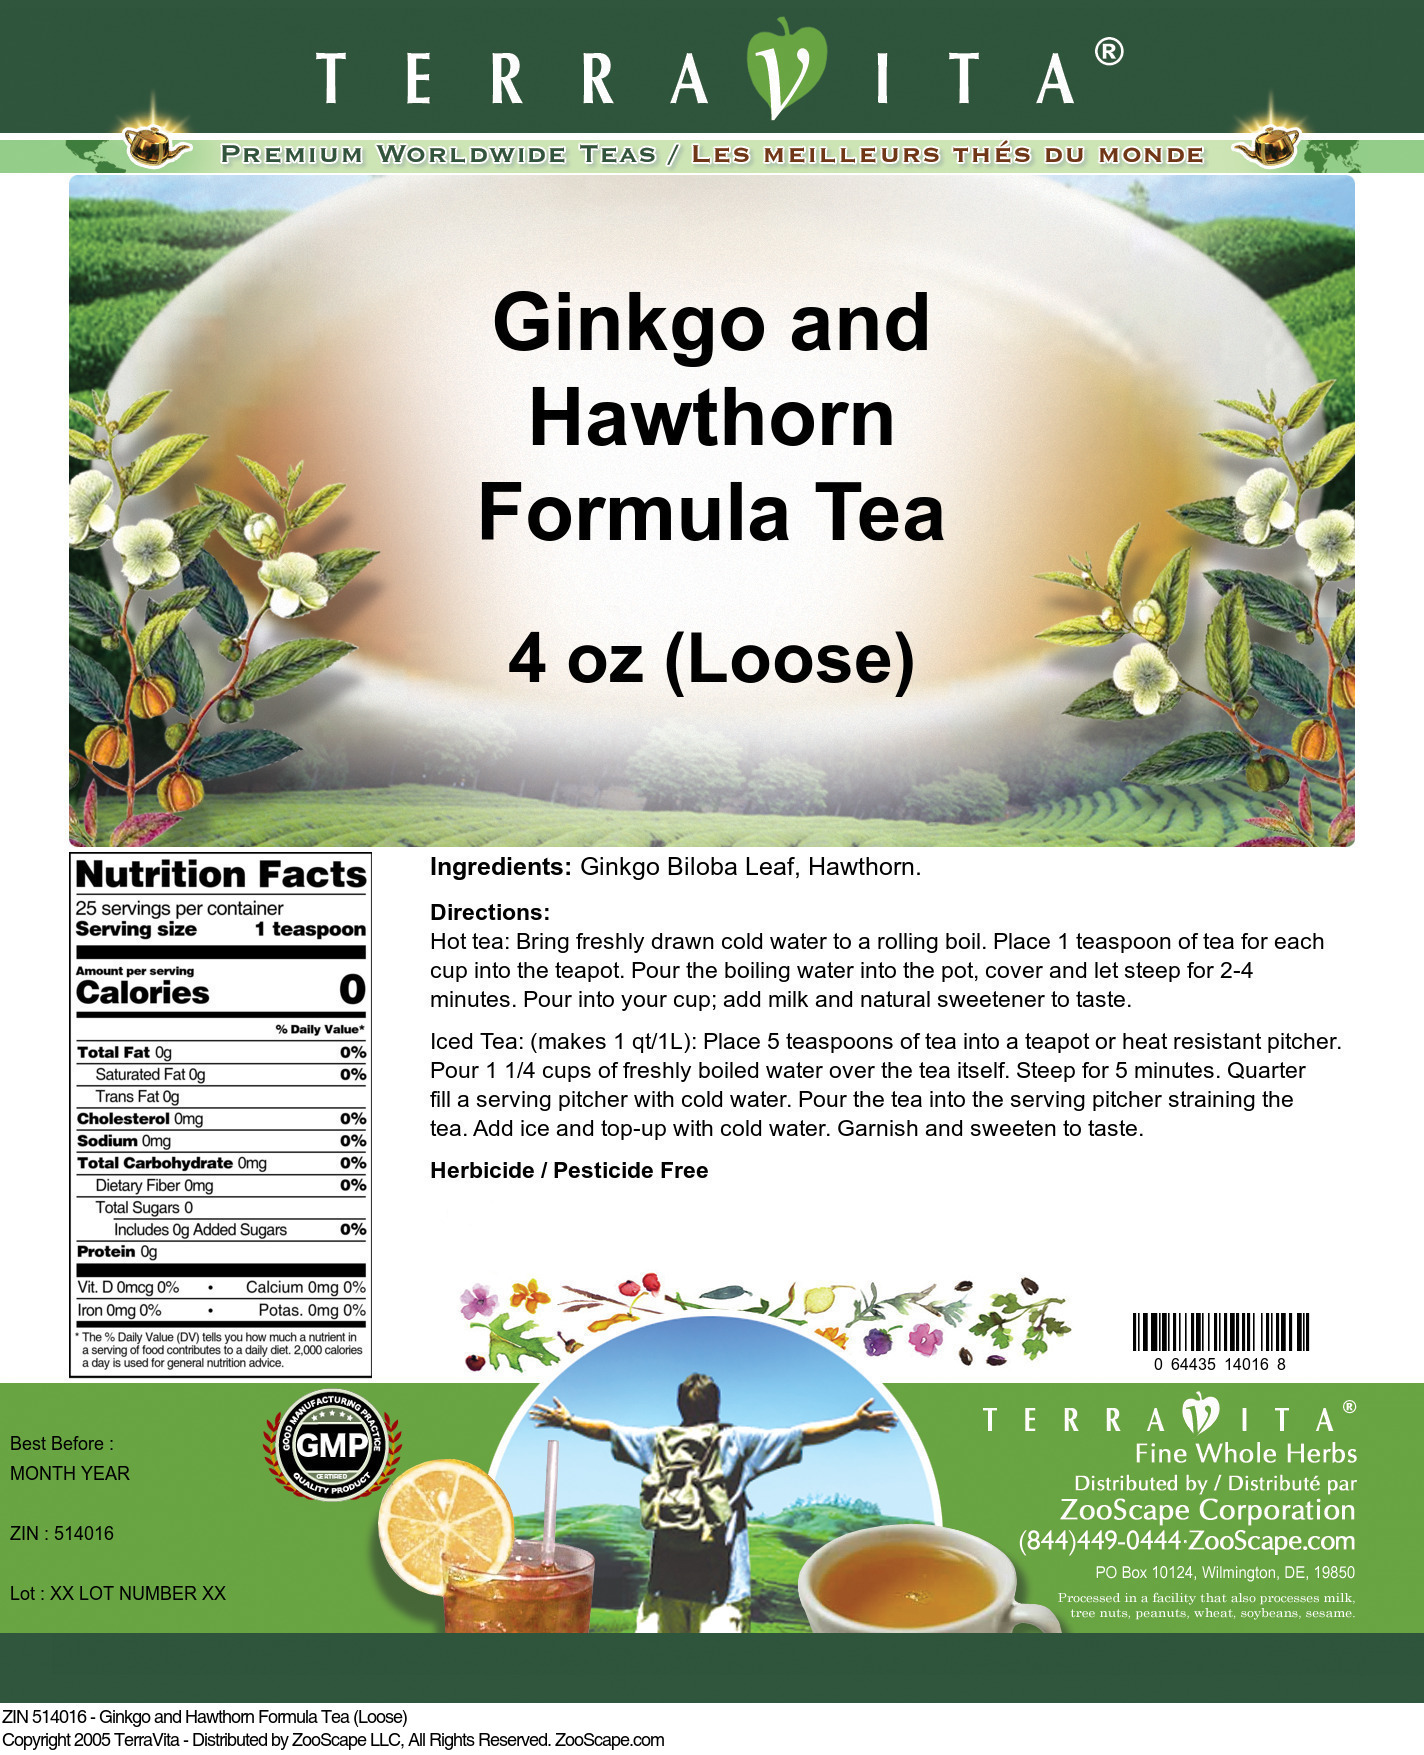 Ginkgo and Hawthorn Formula Tea (Loose) - Label